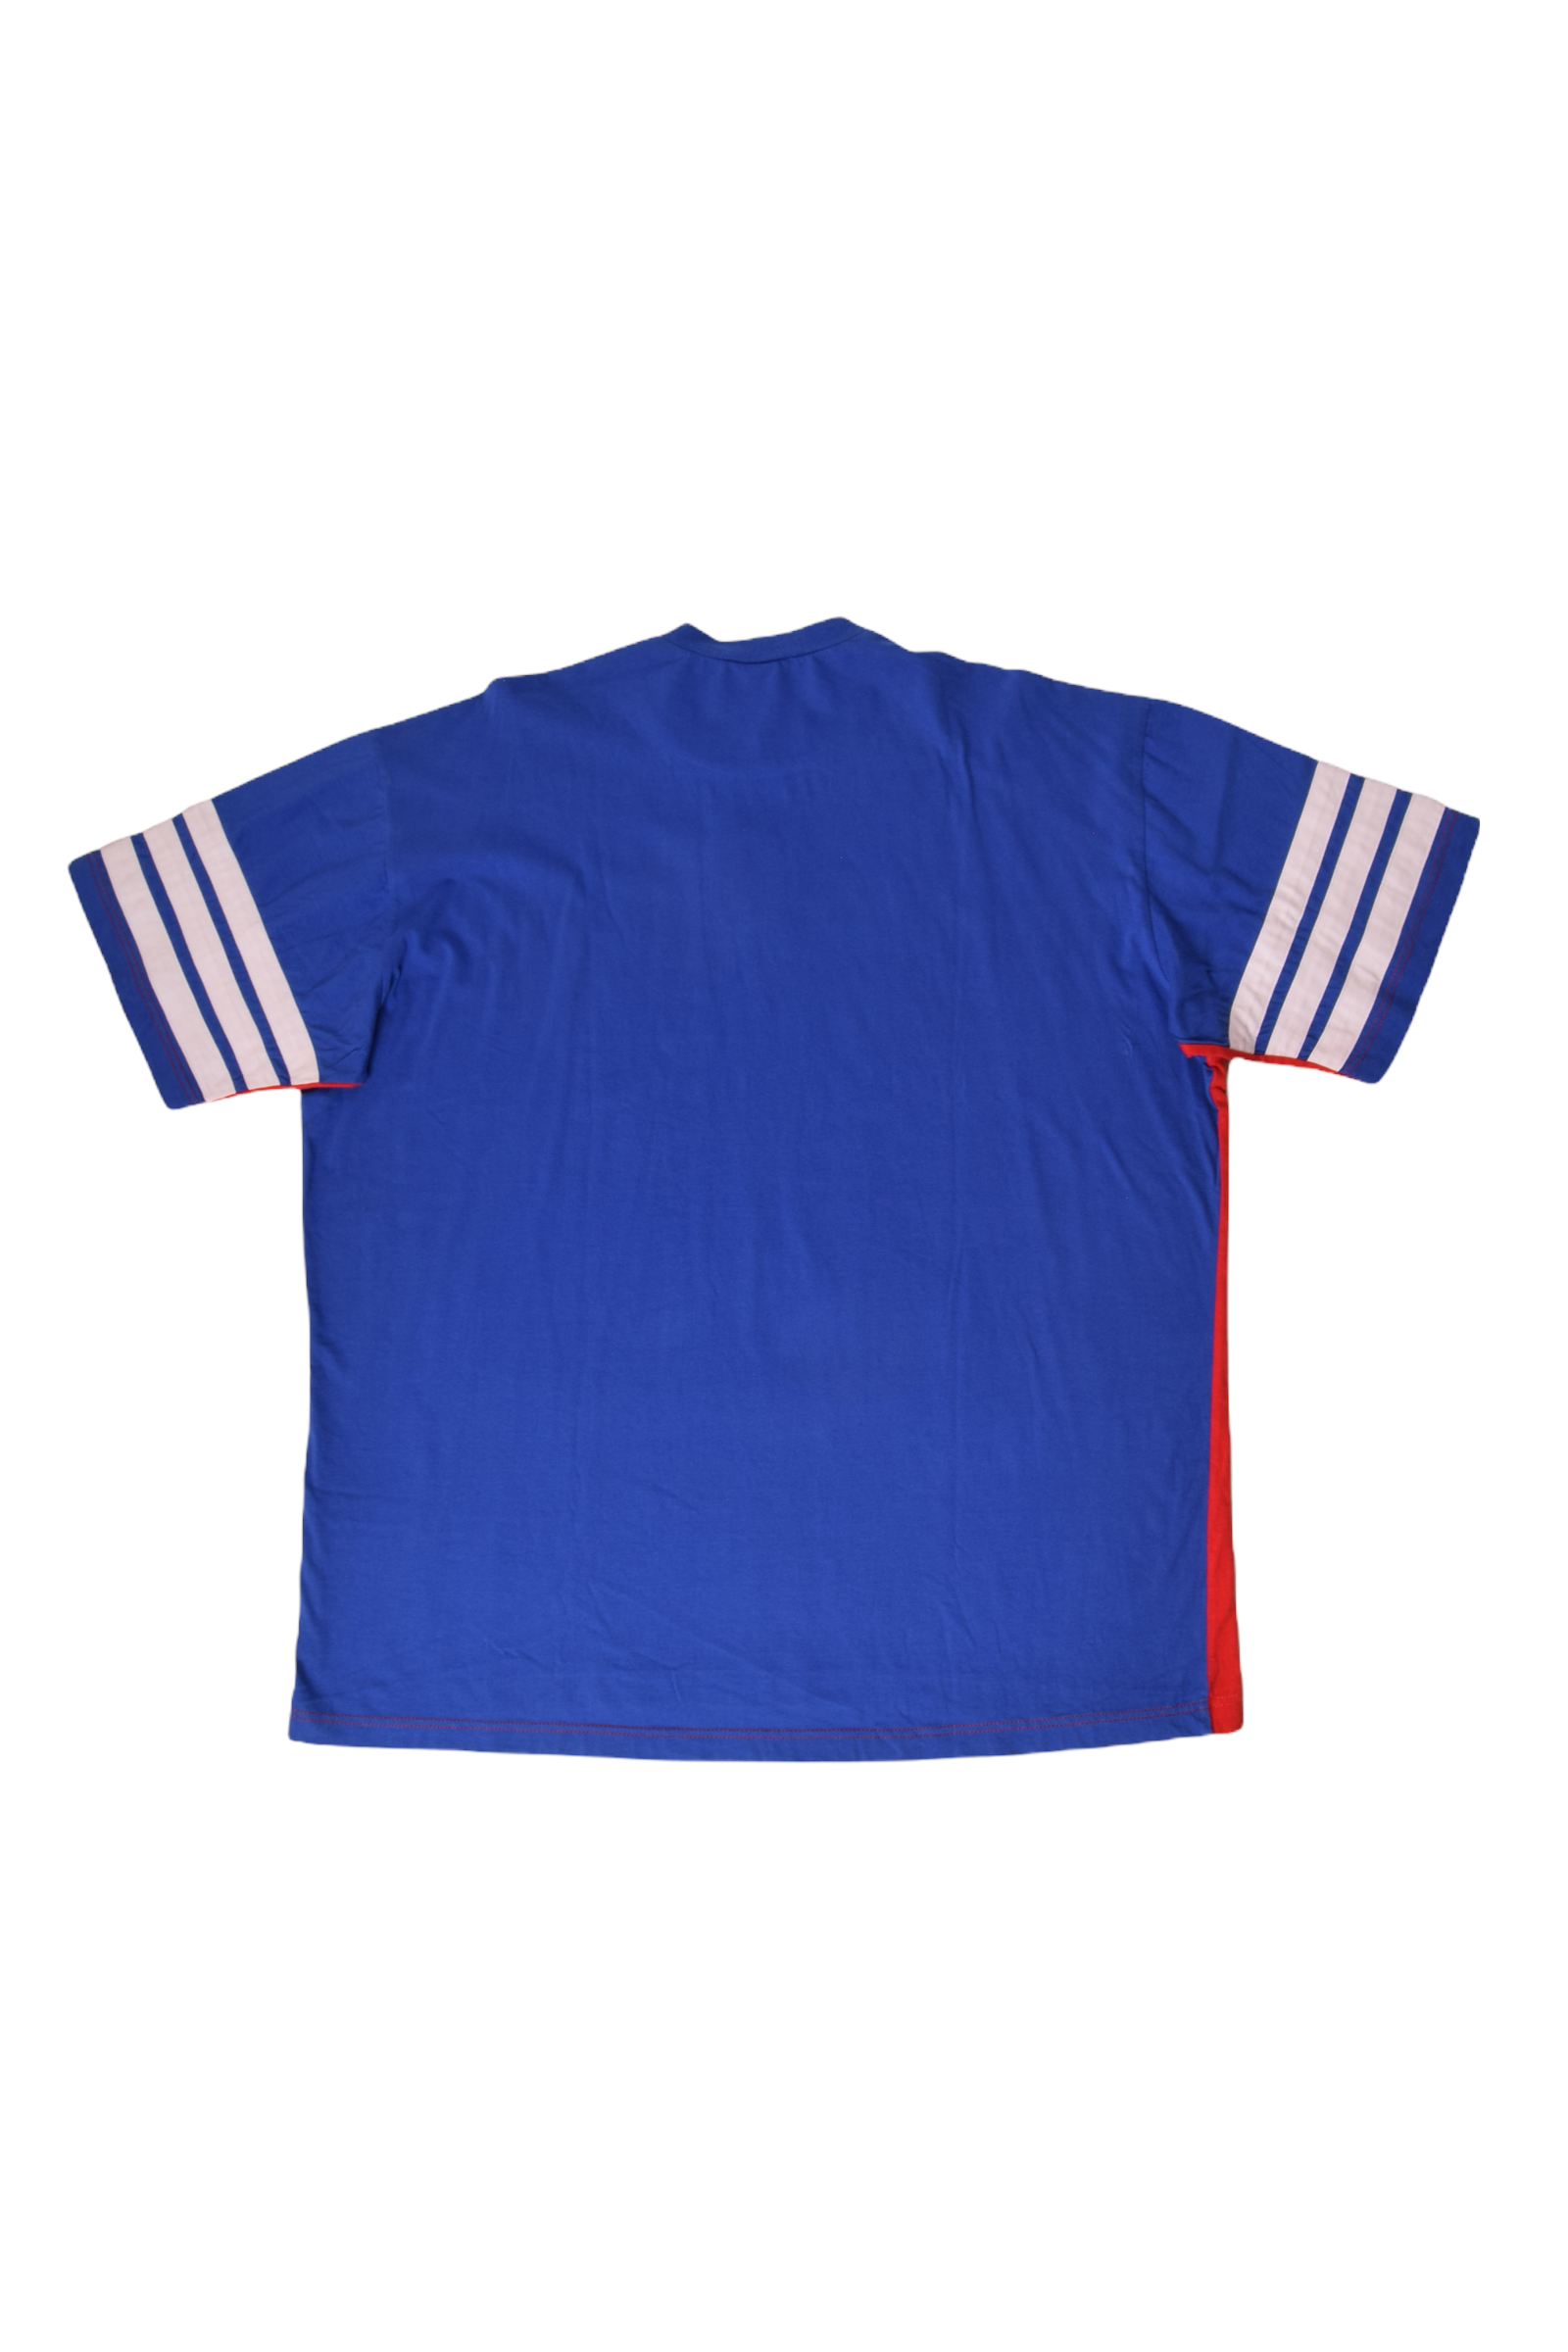 Vintage 90's Bayern Munchen Training Shirt 100% Cotton Red Blue White Size L